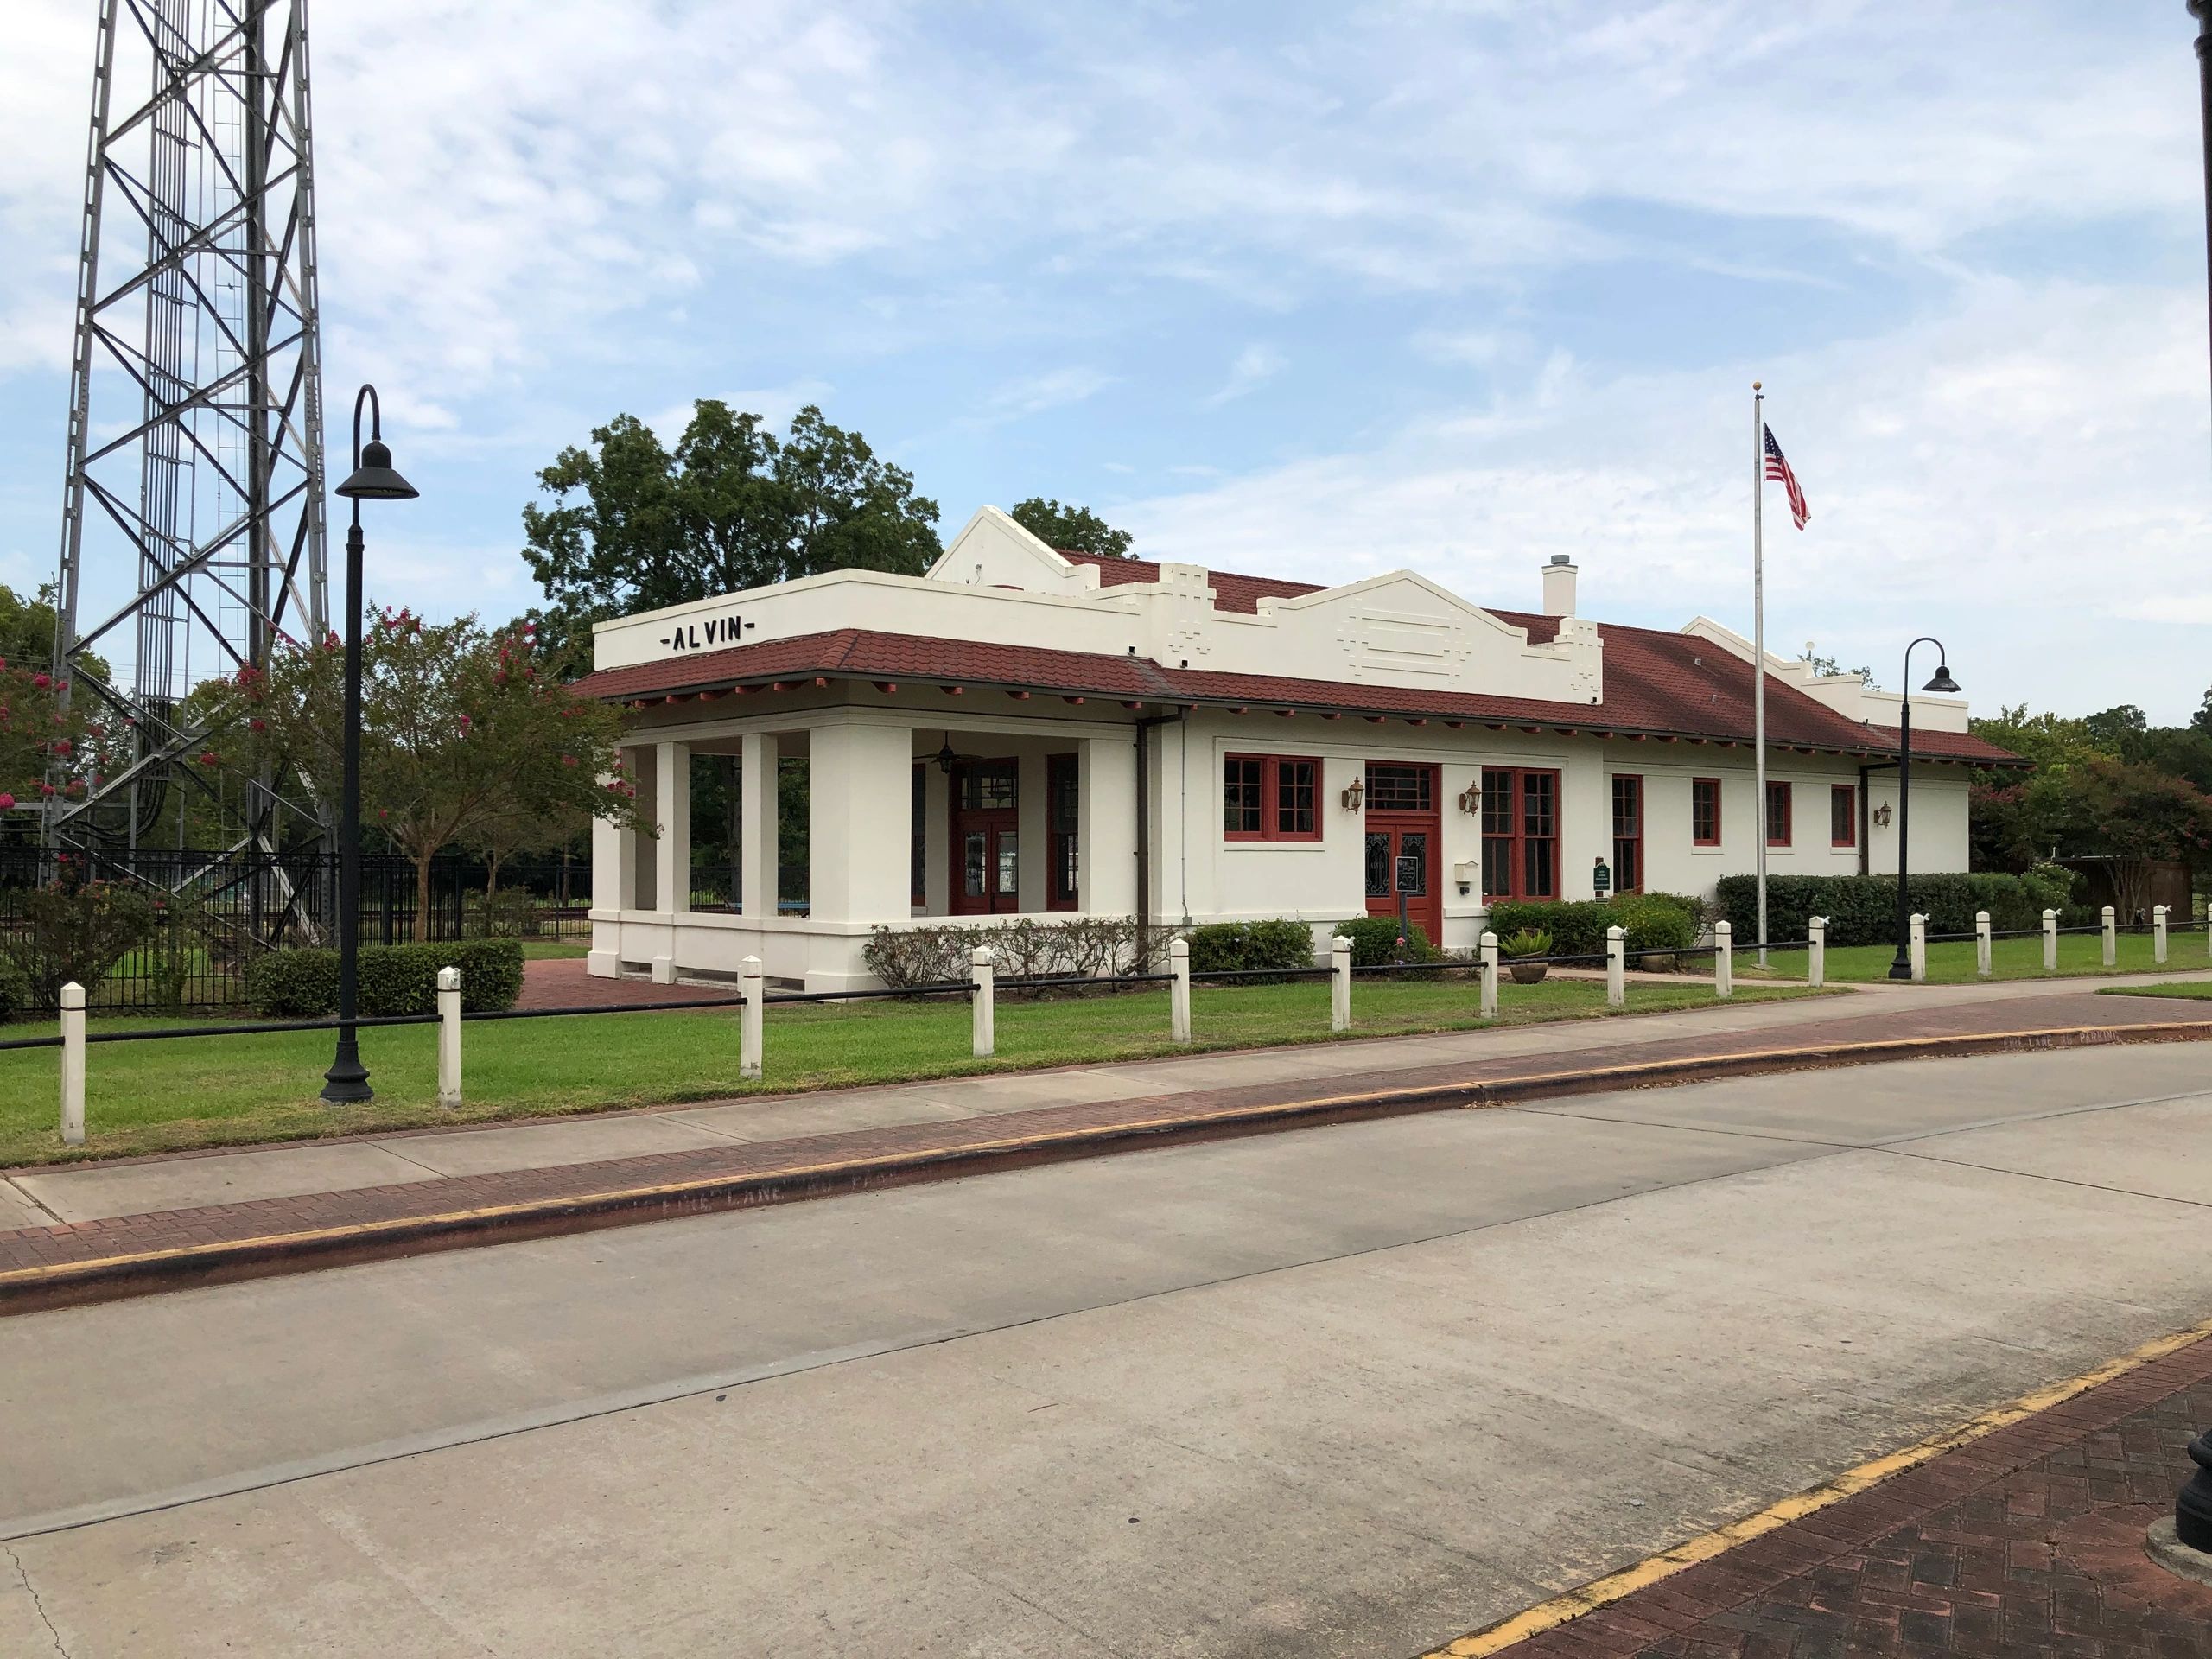 Alvin Train Depot in Alvin, Texas.